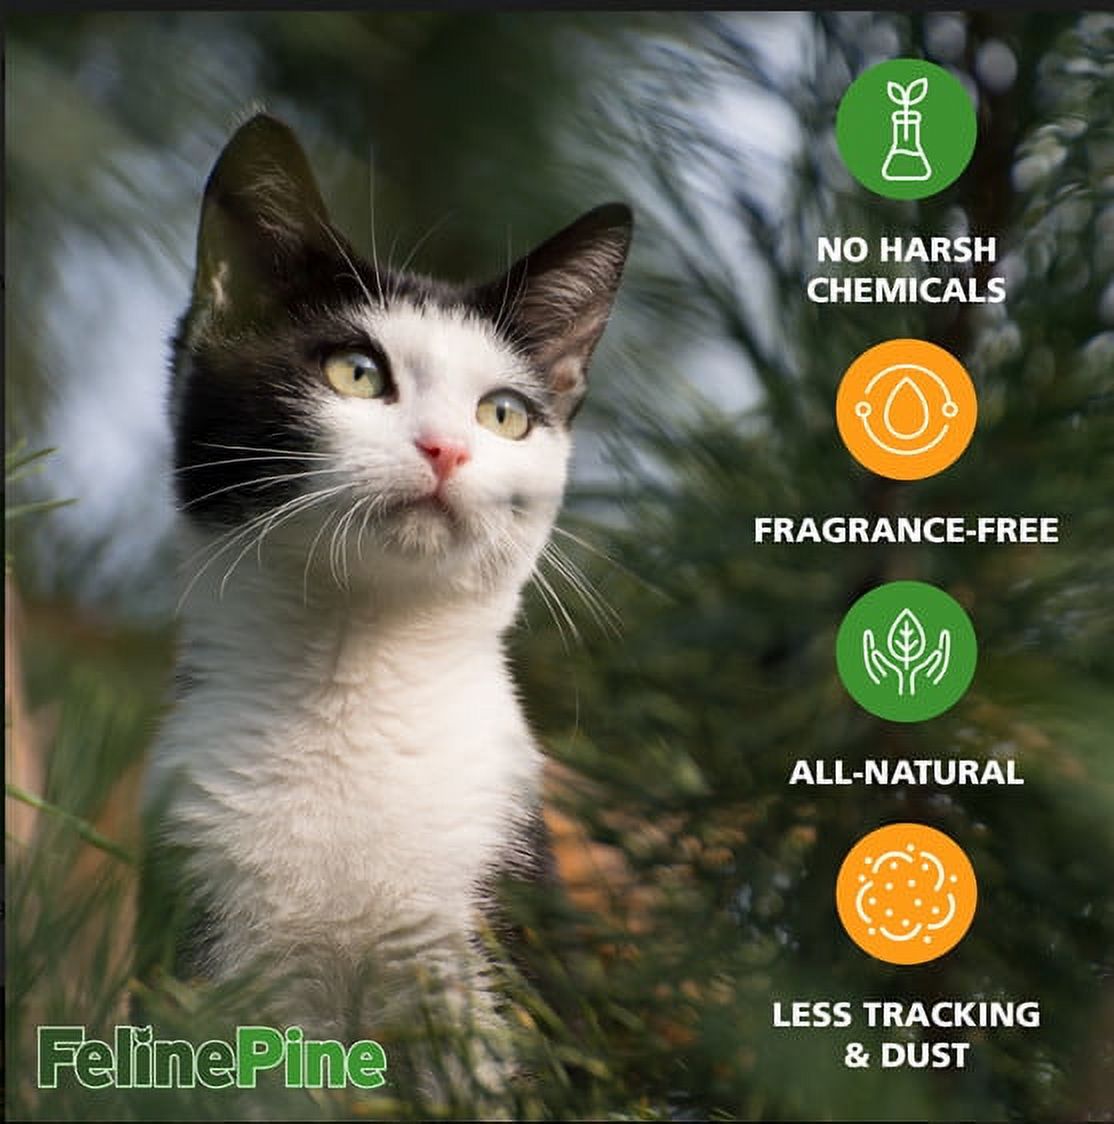 Feline Pine Original 100% Natural Cat Litter, 20 lb - image 5 of 8